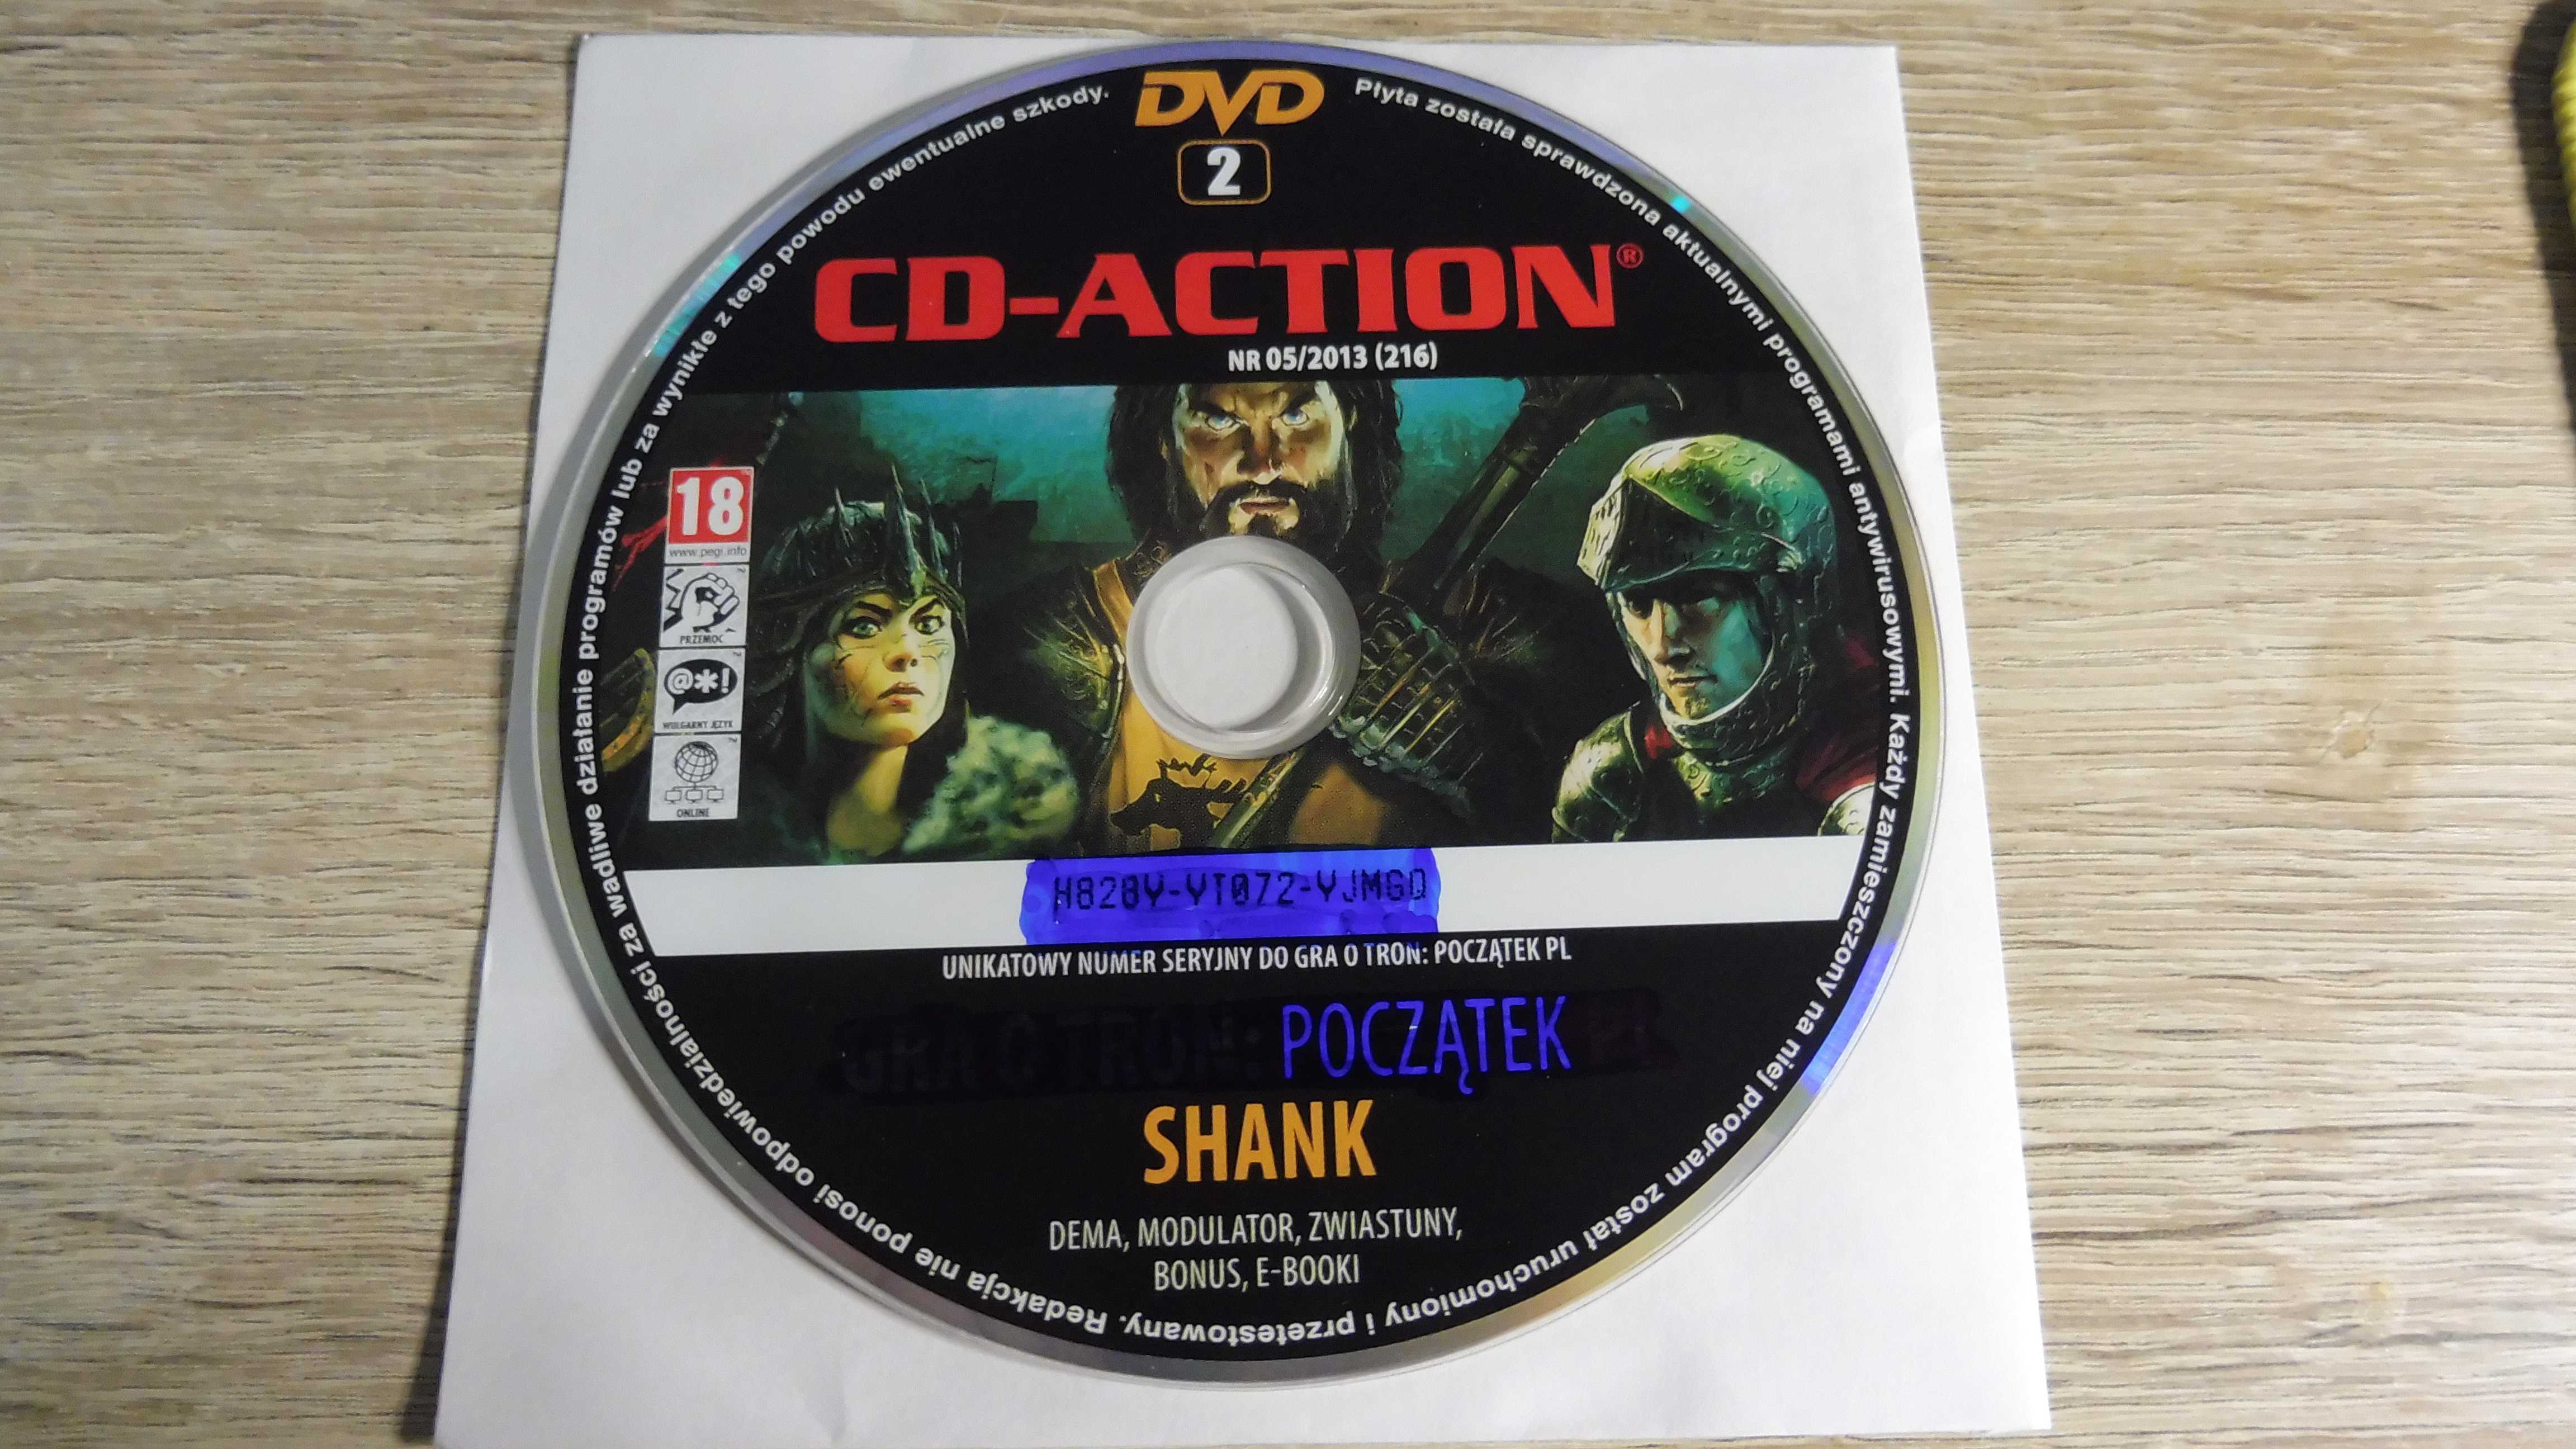 CD Action 05/2013 (216) - DVD 2 - Shank